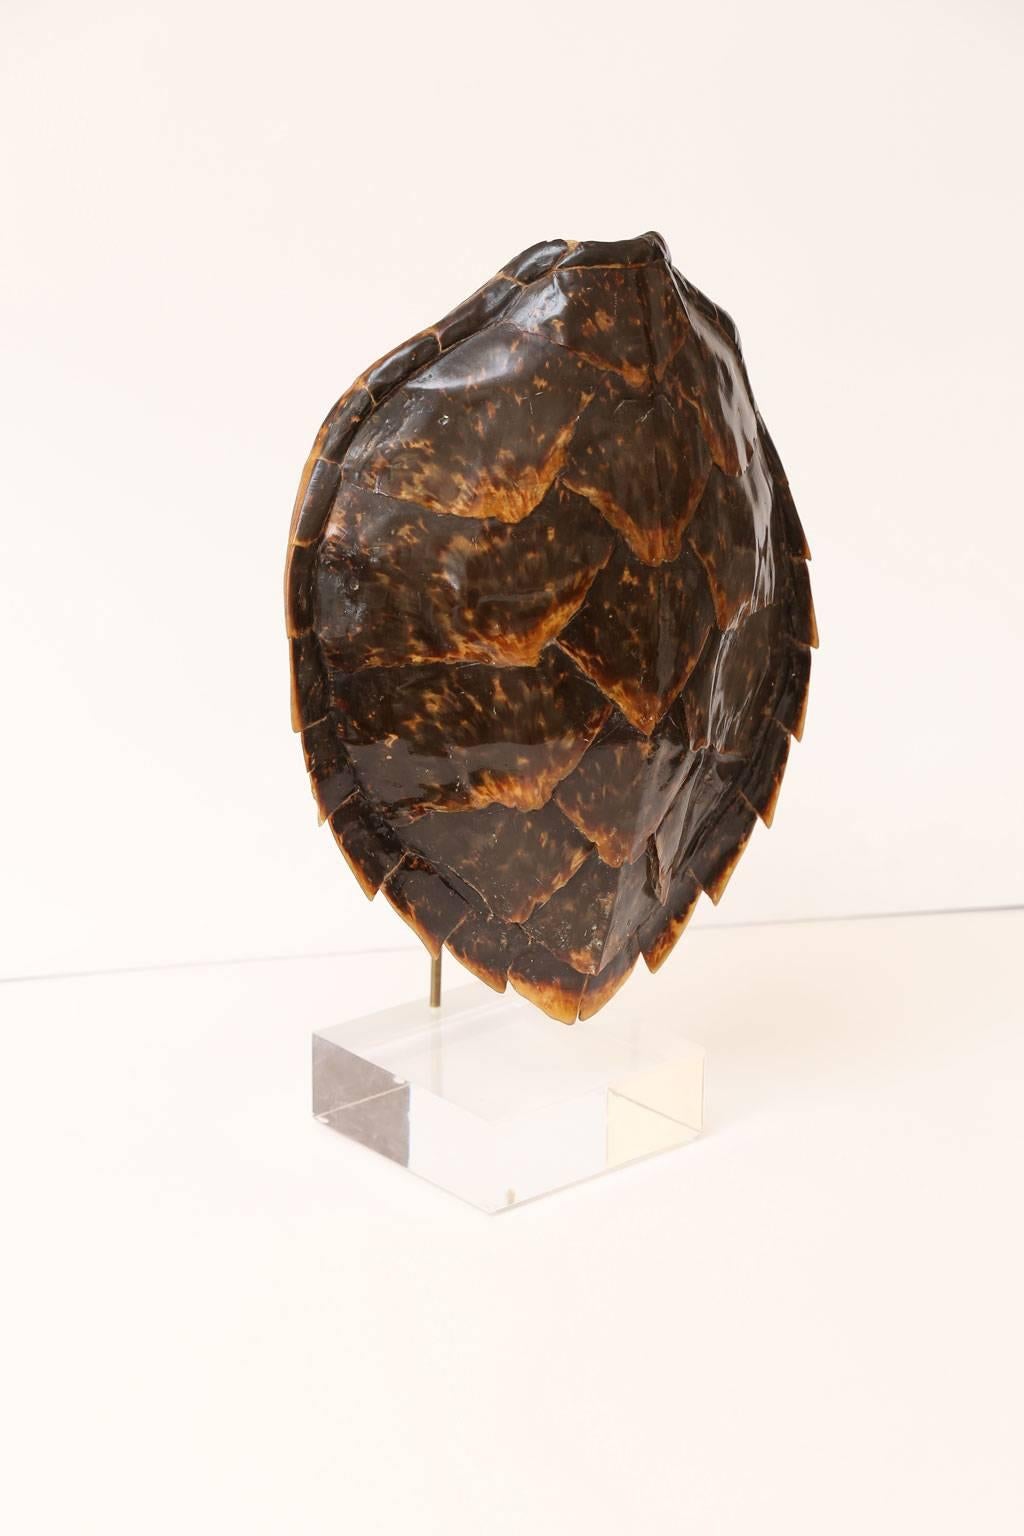 Large Vintage Tortoiseshell or Carapace 3